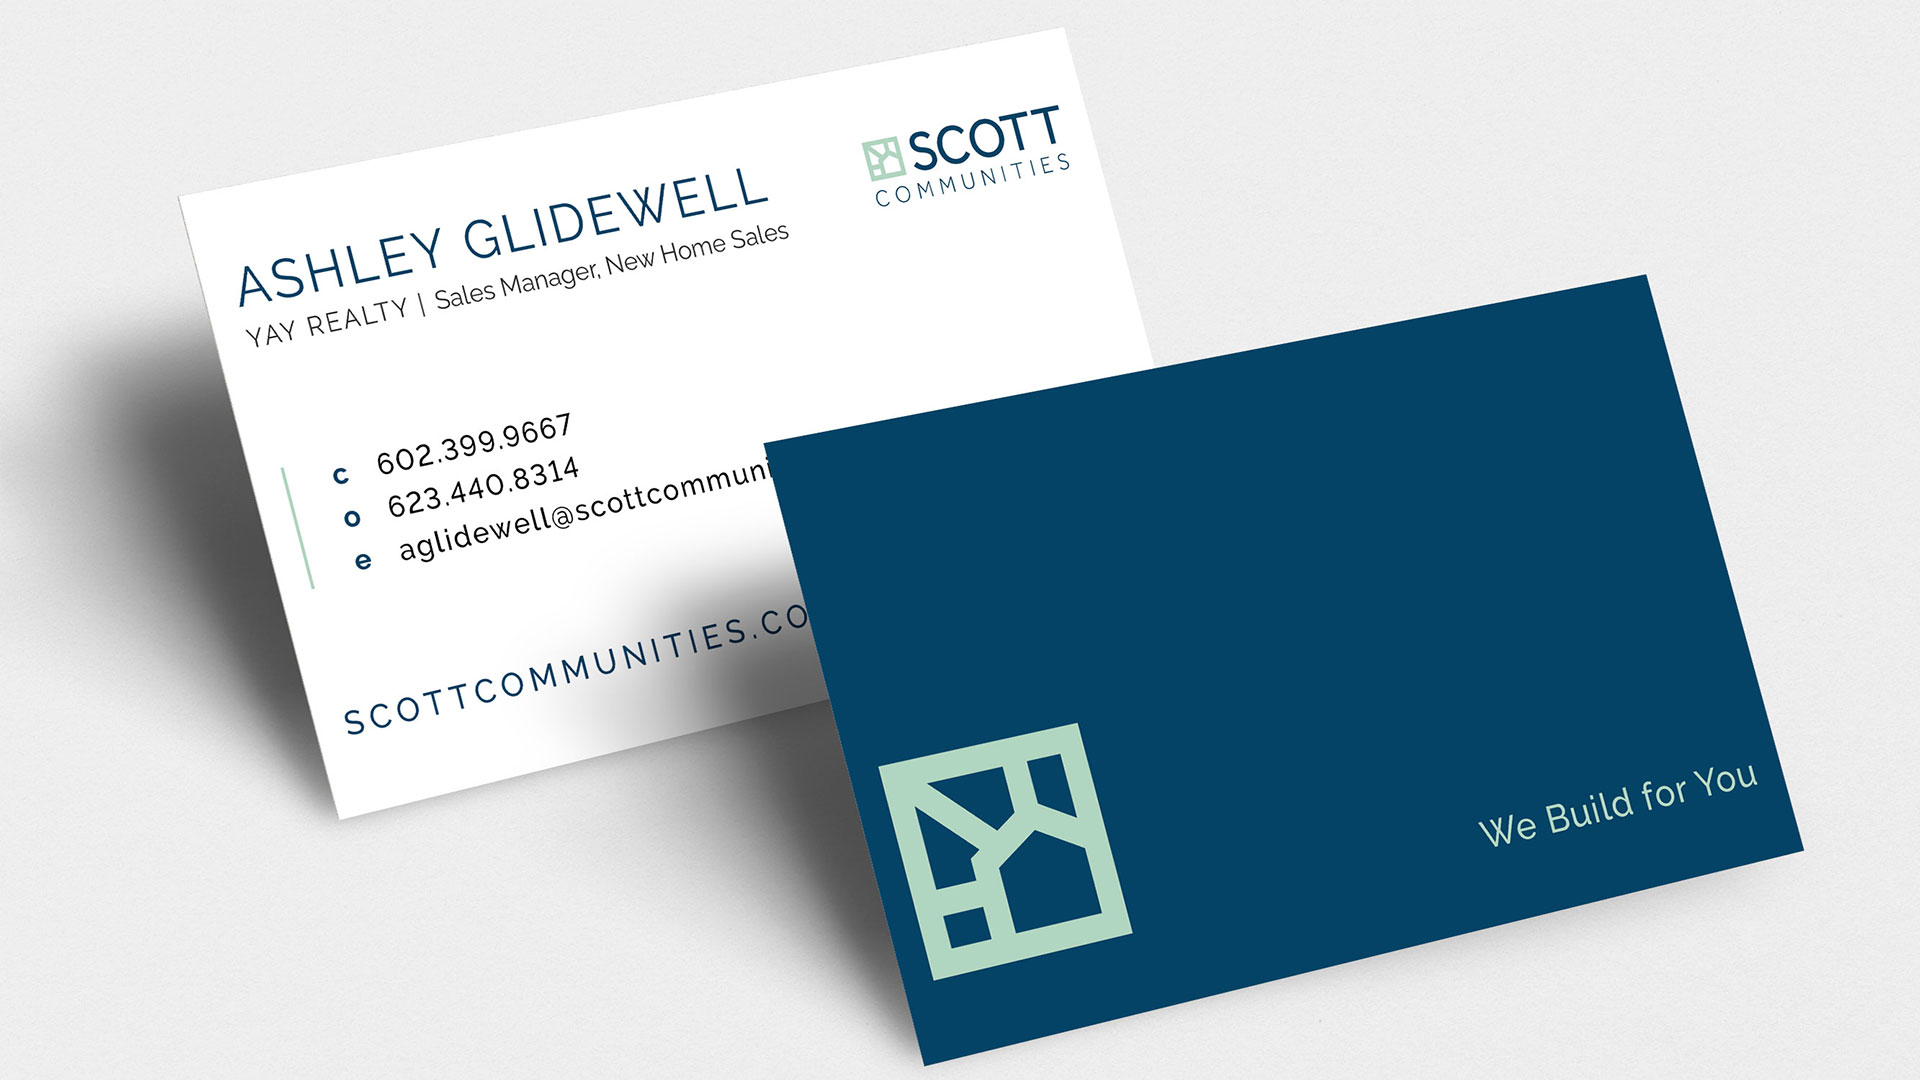 Scott-Communities_Business_Cards1_Mockup_1920X1080